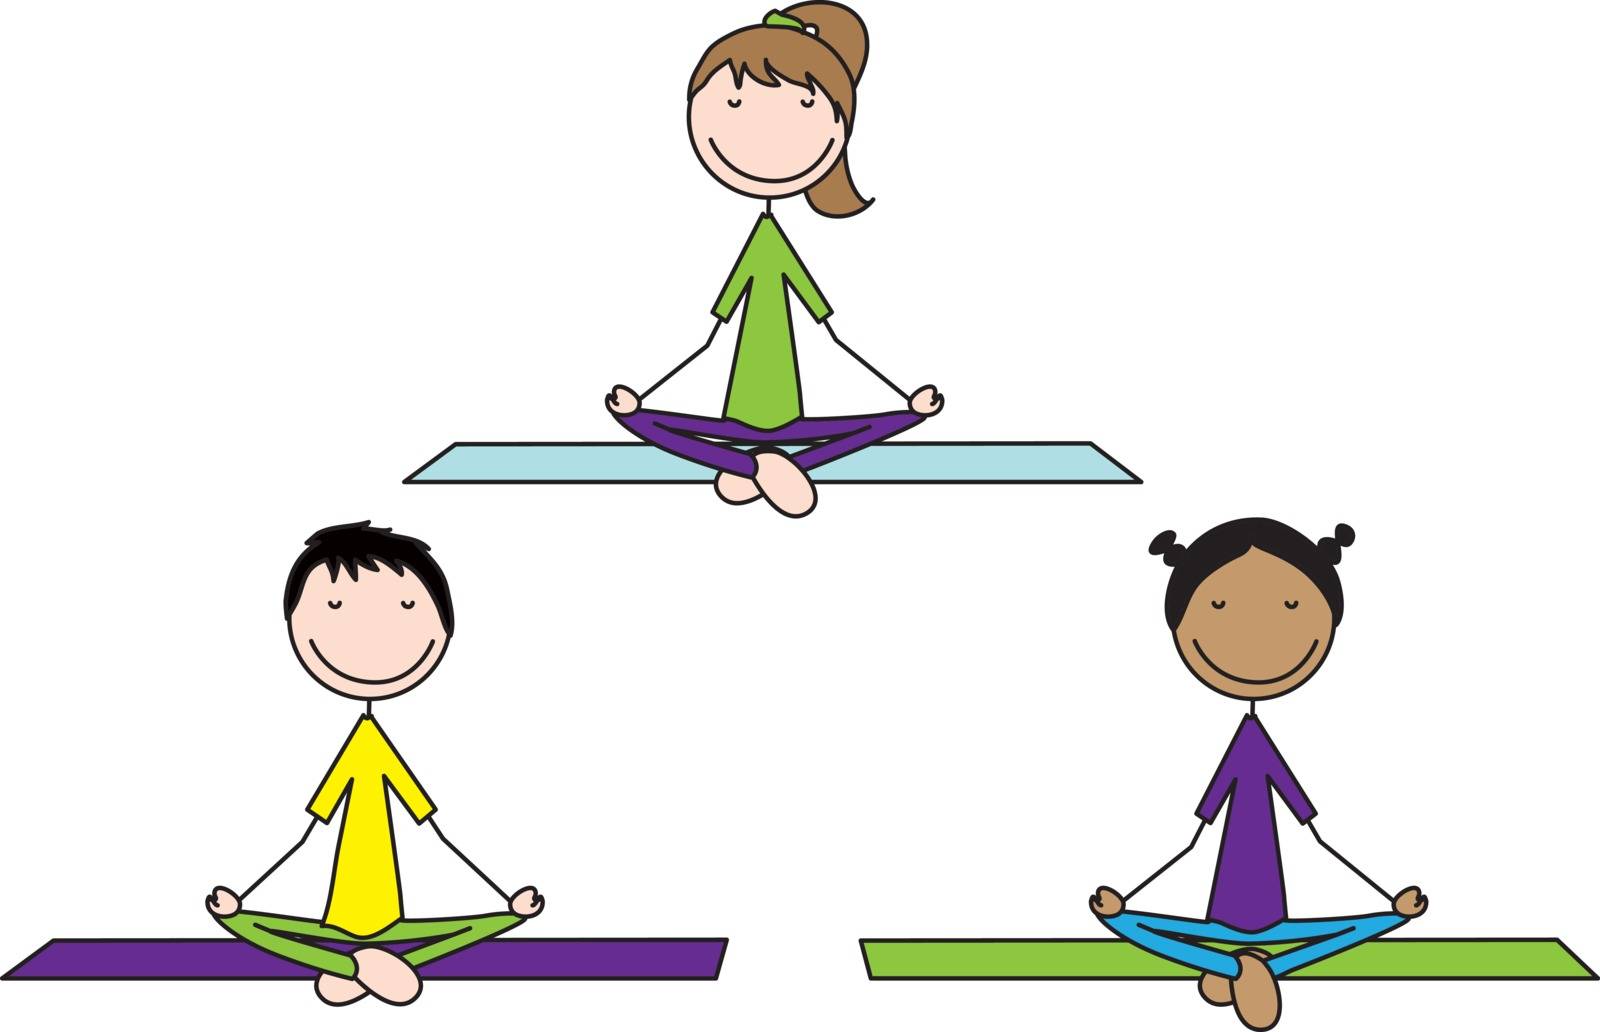 Cartoon illustration of three kids exercising